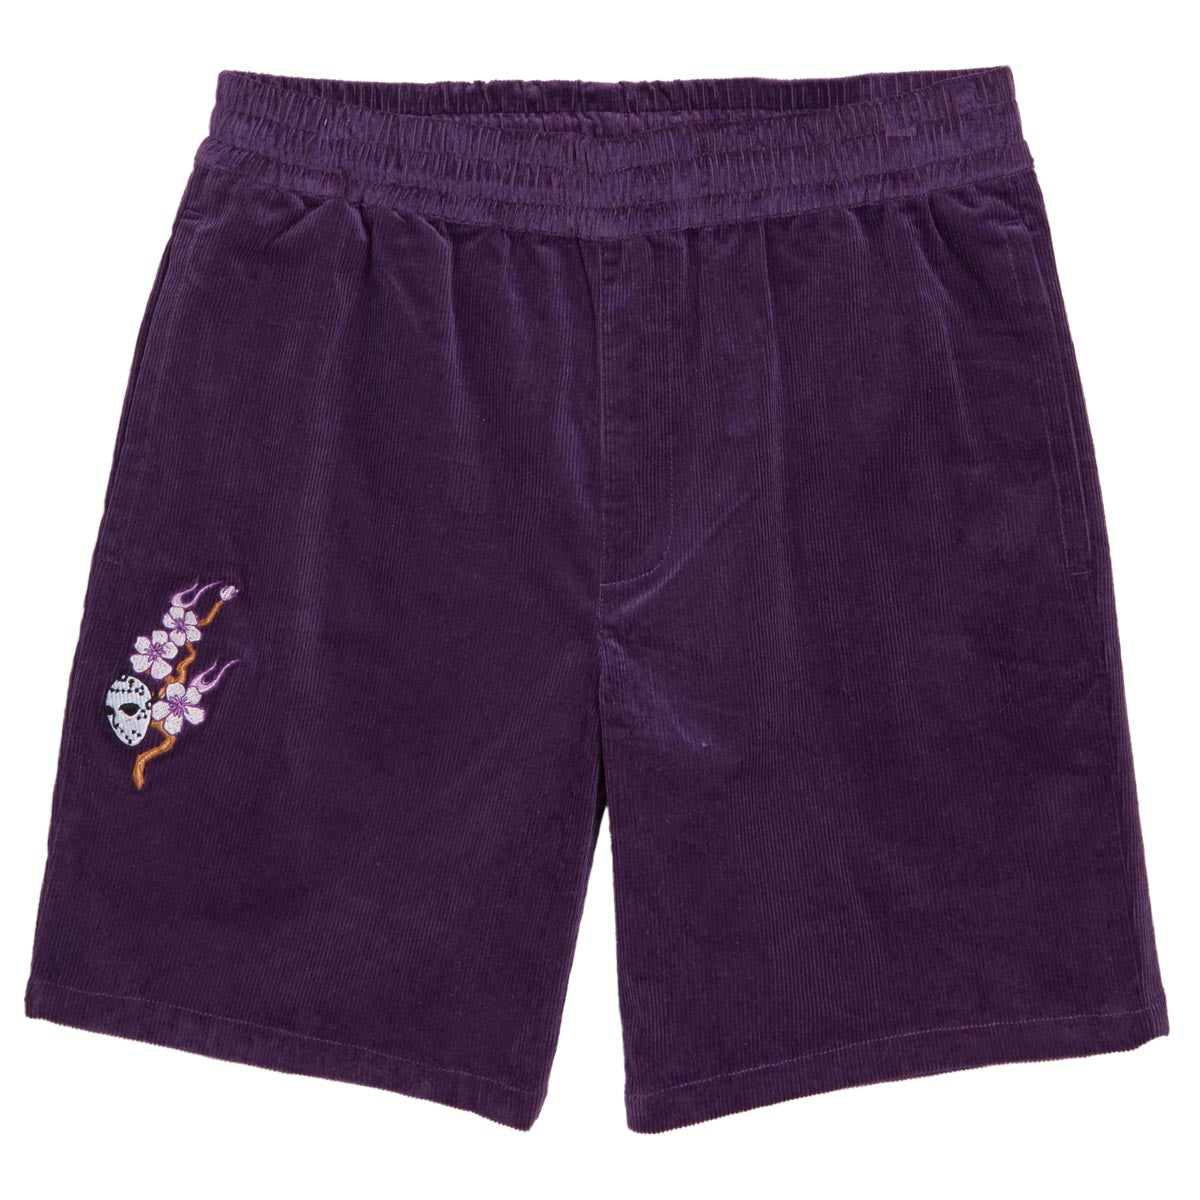 DGK Fire Blossom Shorts - Purple image 1